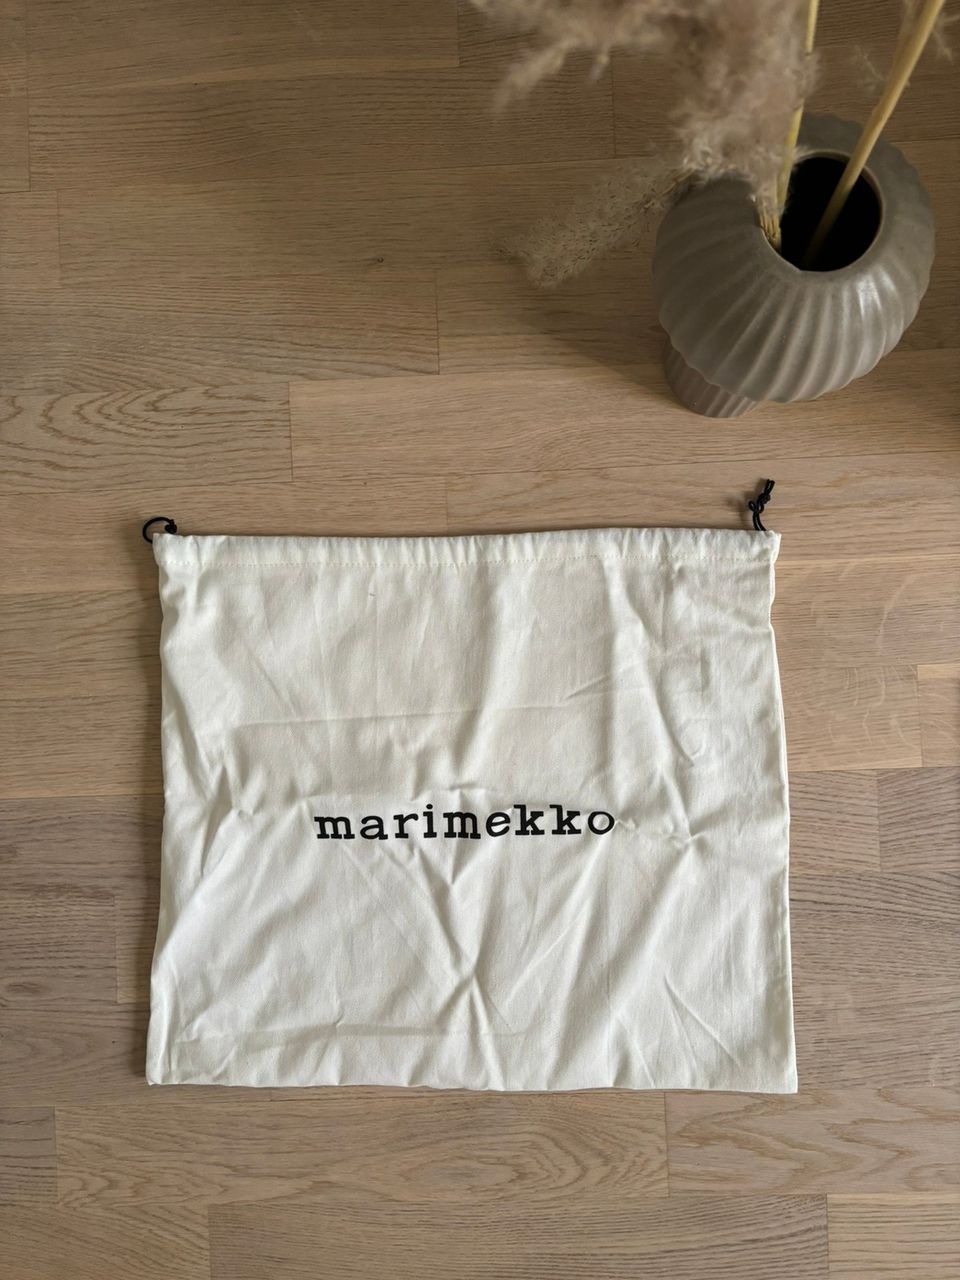 Marimekko dust bag